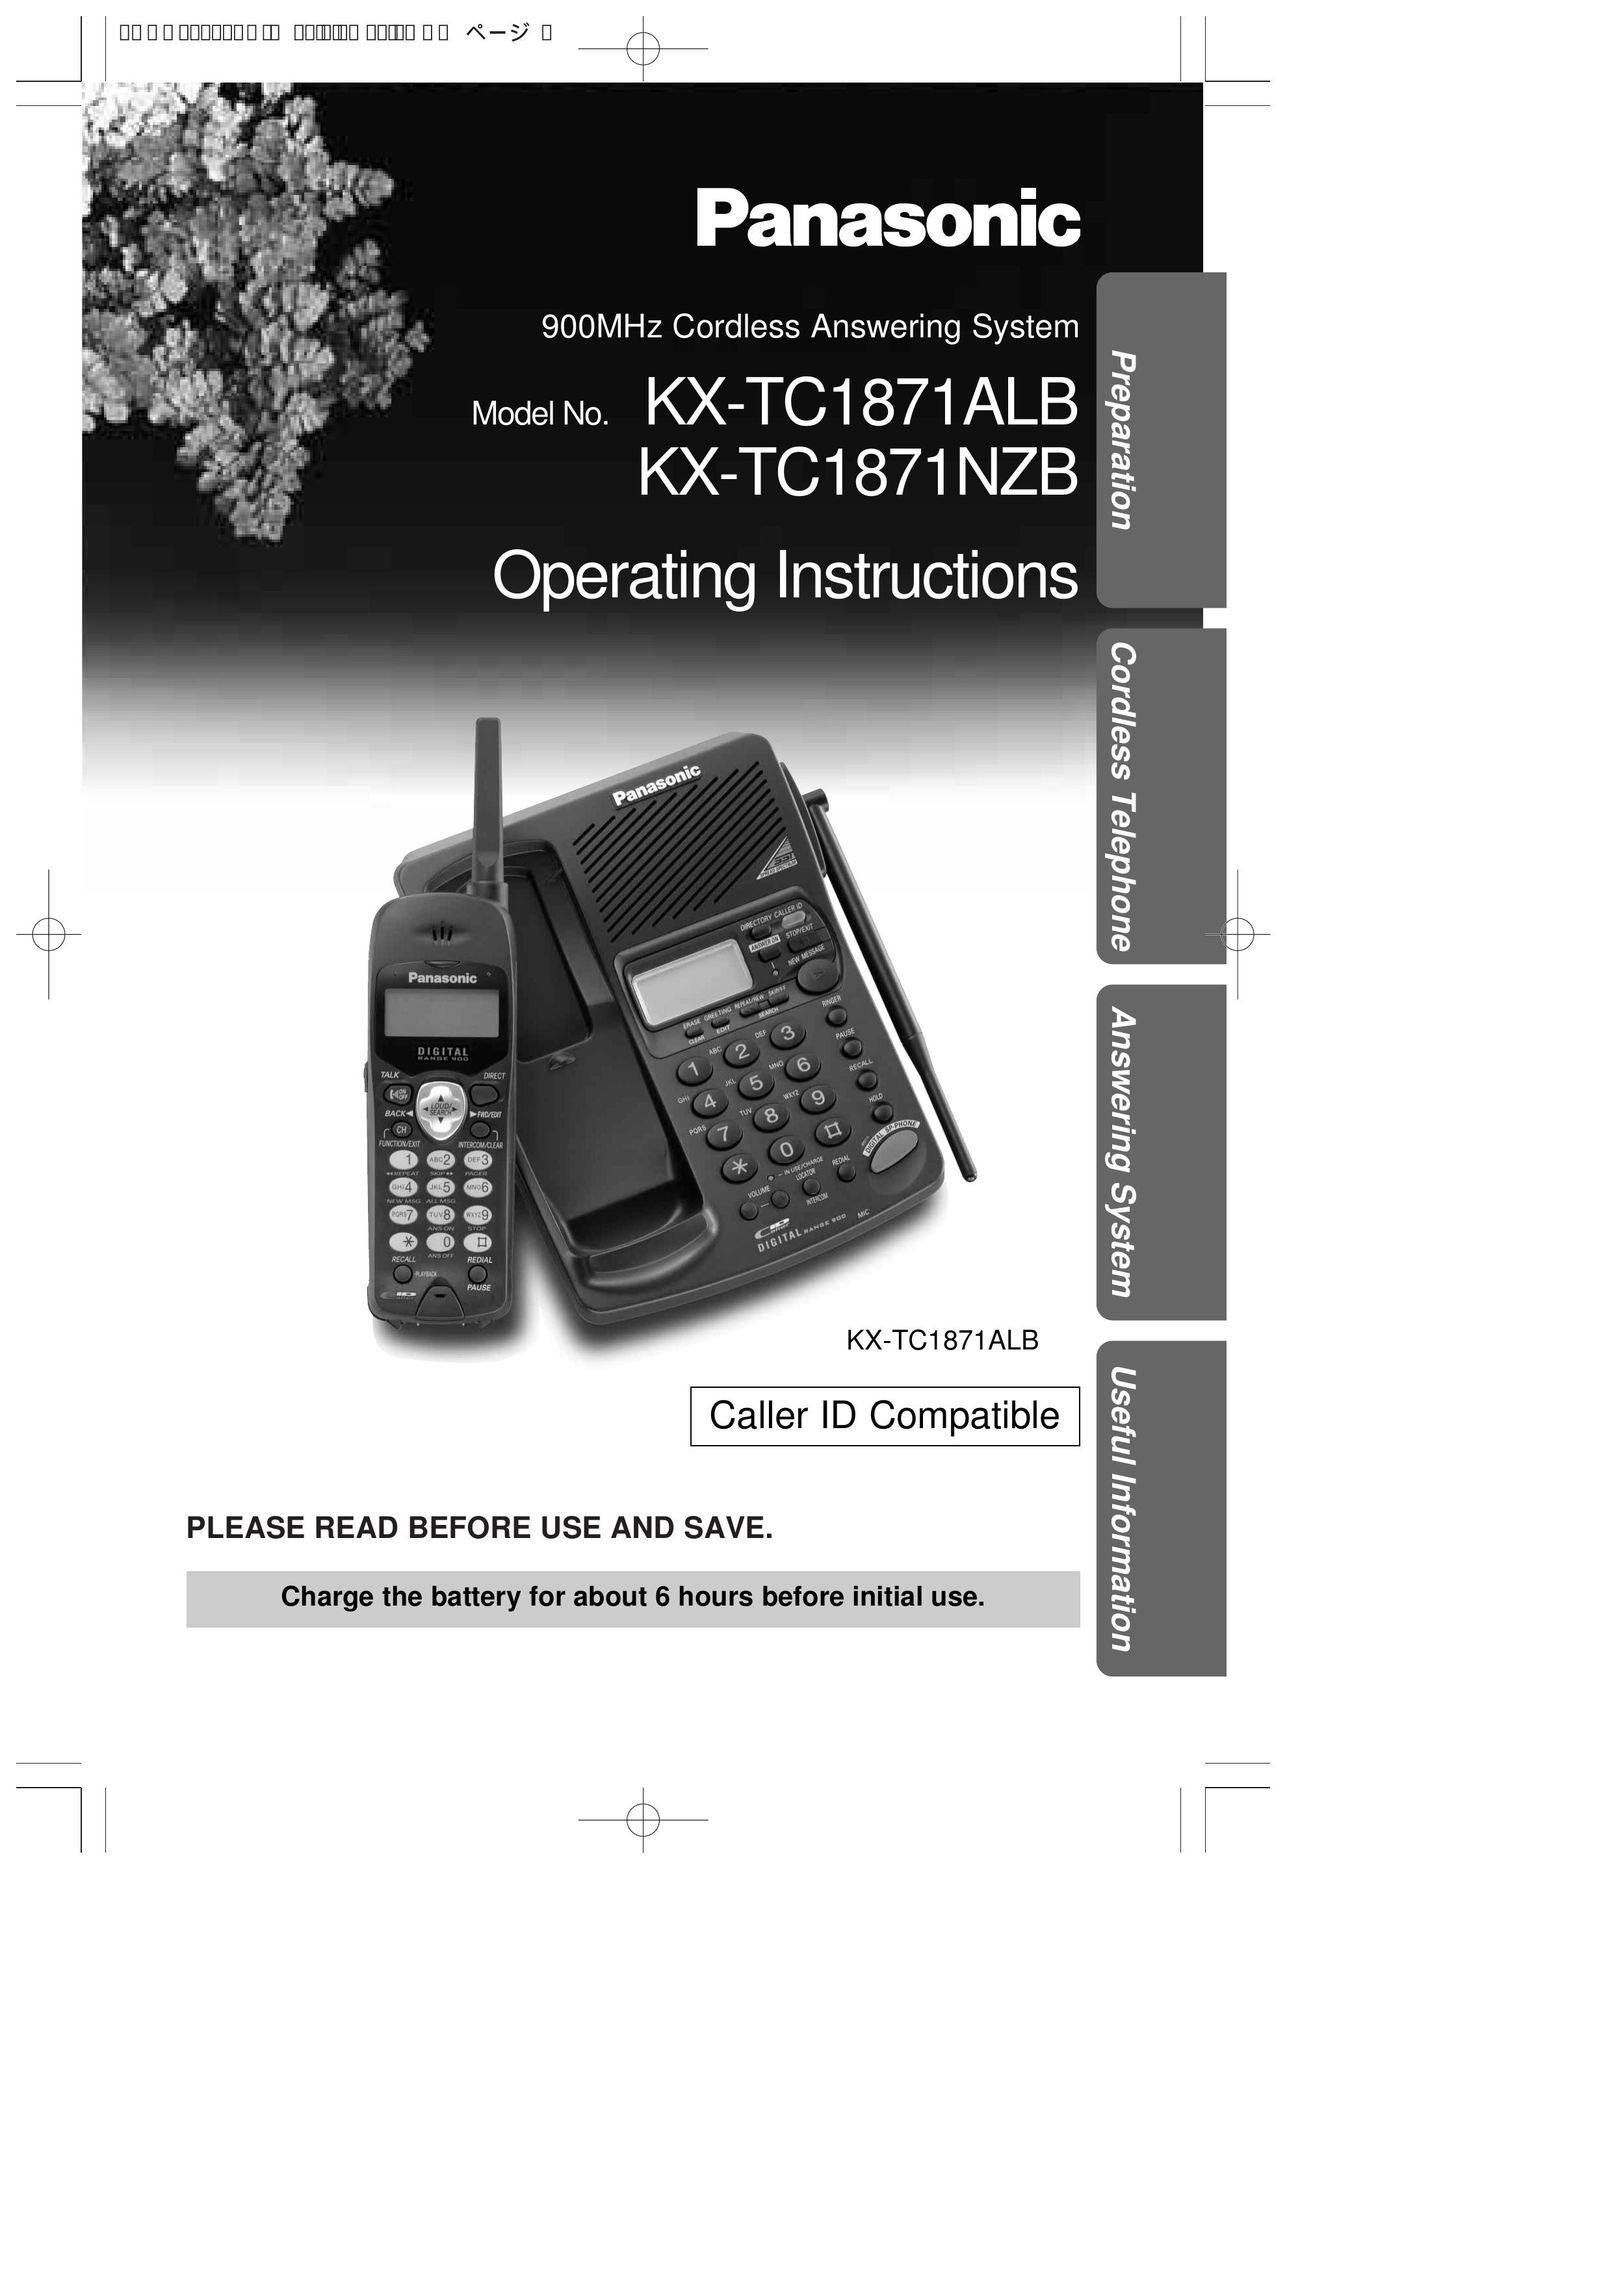 Panasonic KX-TC1871NZB Answering Machine User Manual